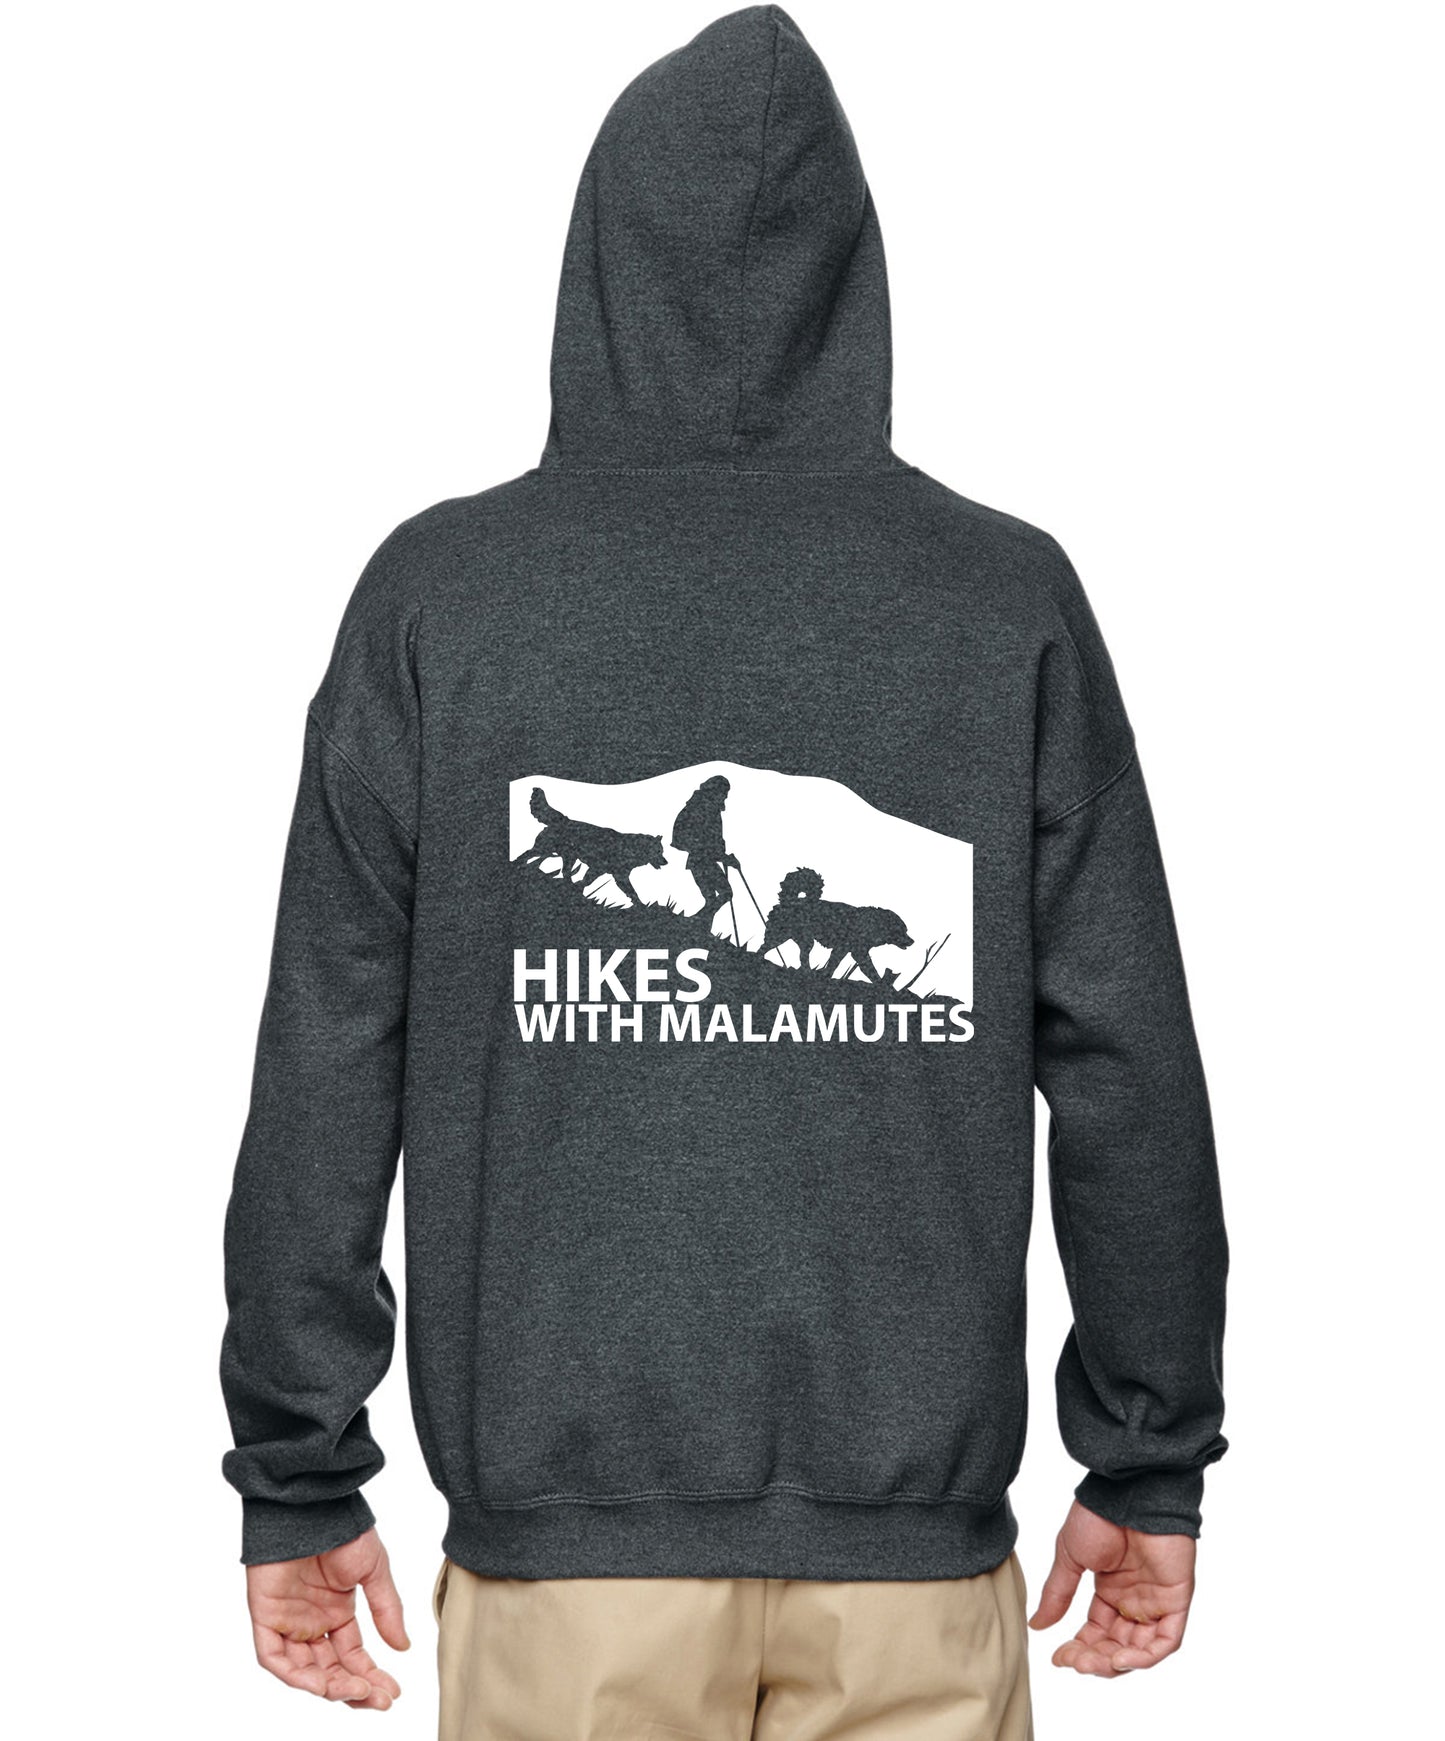 Hikes with Malamutes - Alaskan Malamute Zip Hooded Sweatshirt